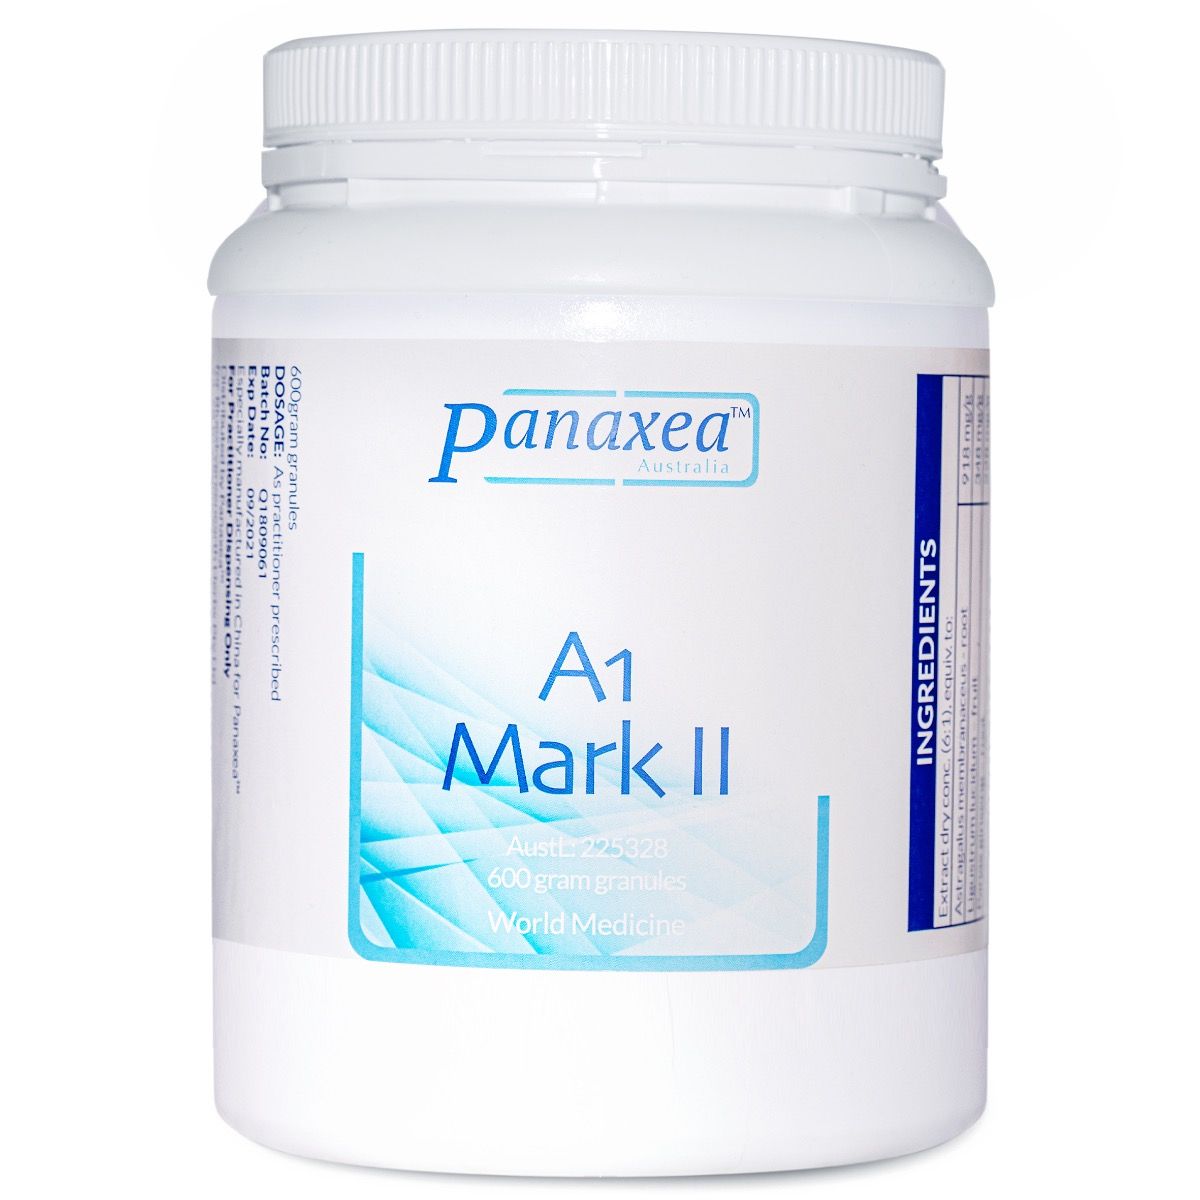 PANEXEA - A1 Mark II Solid Tumors 600g Granules